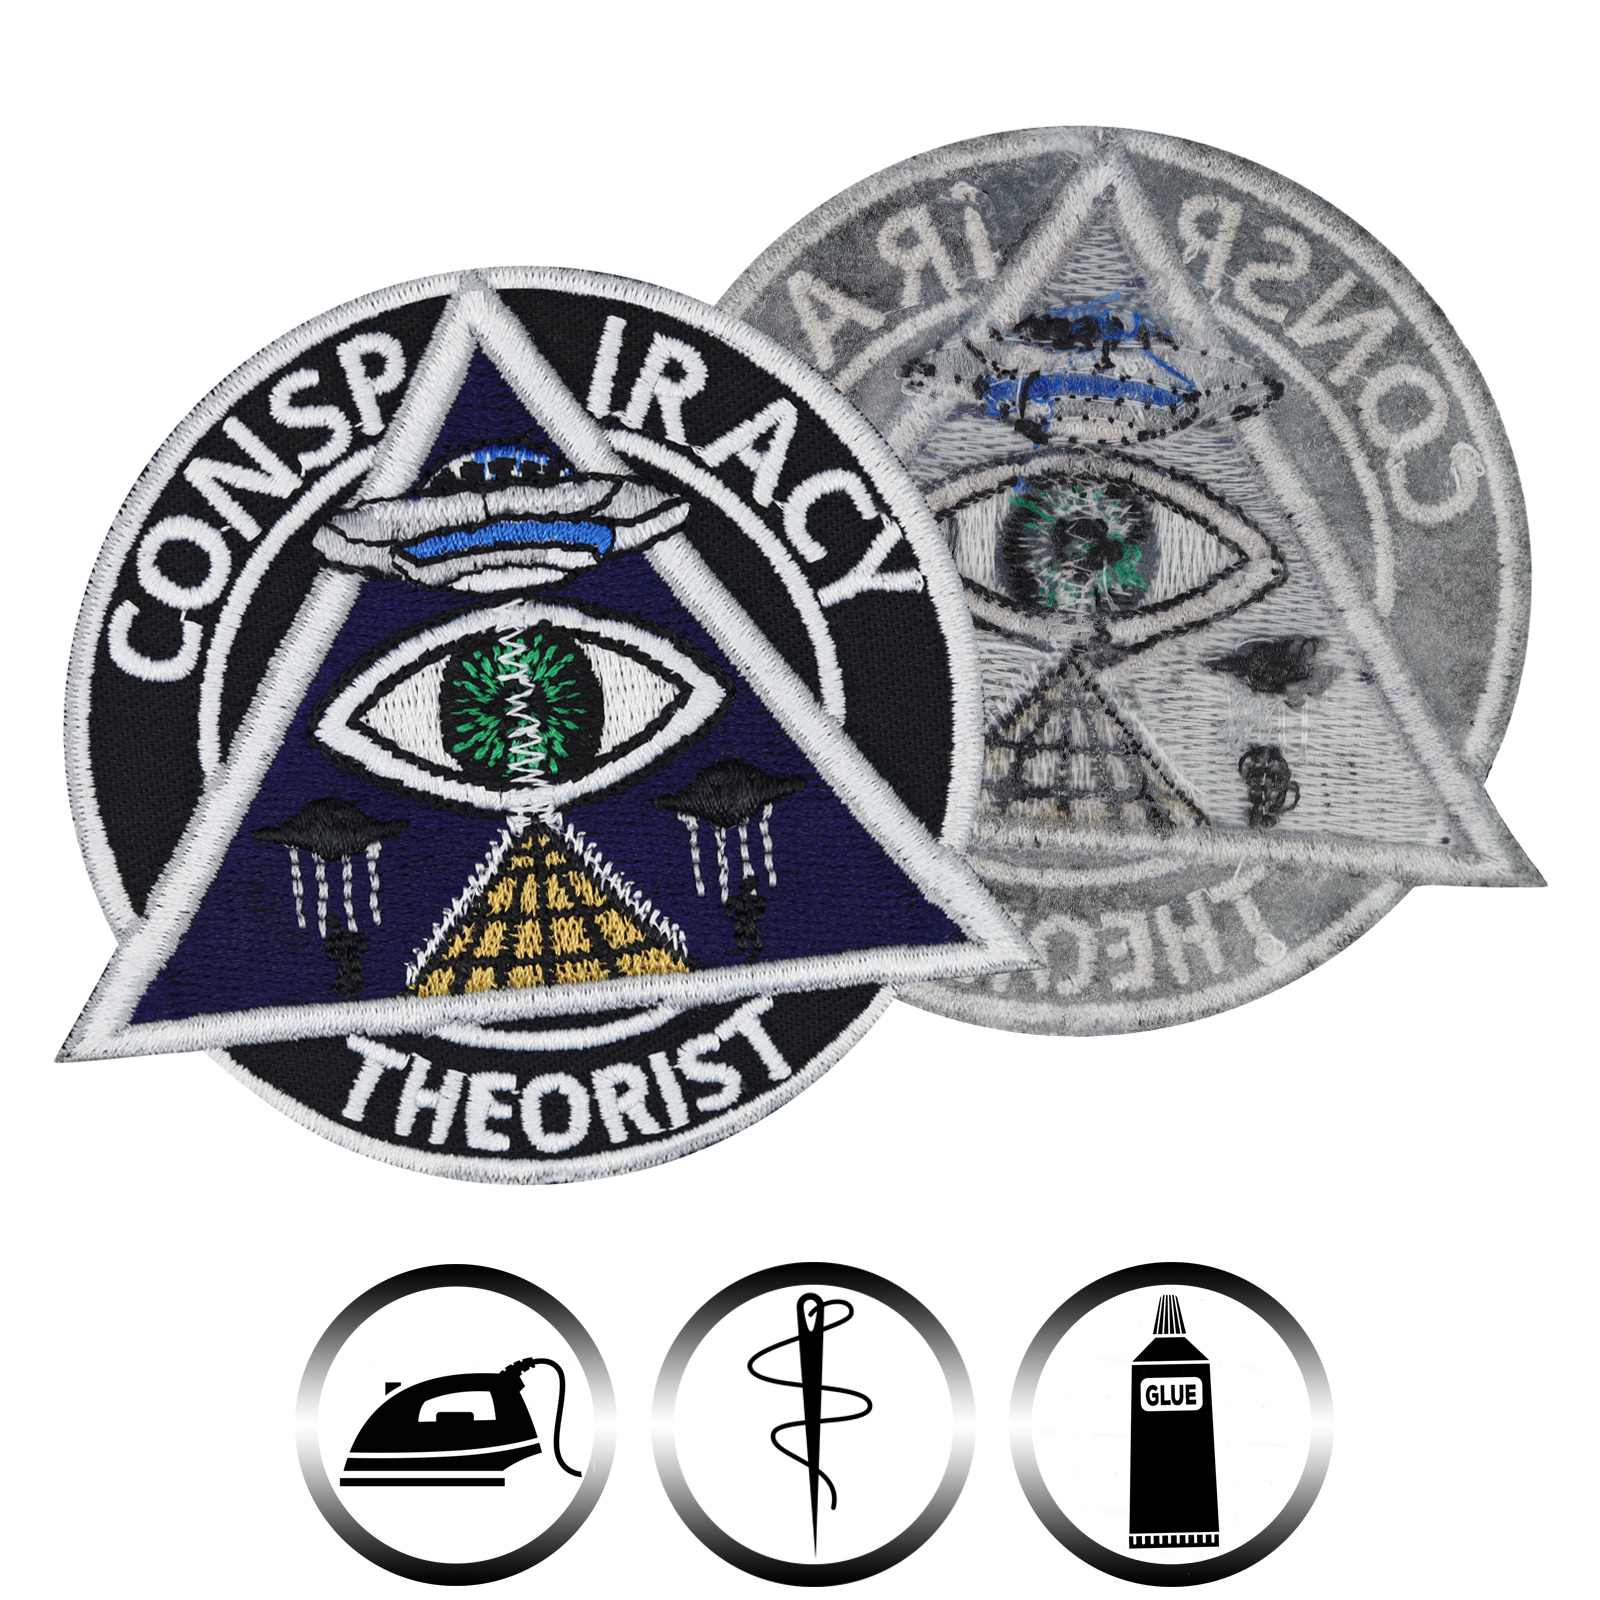 Conspiracy Theorist - Patch